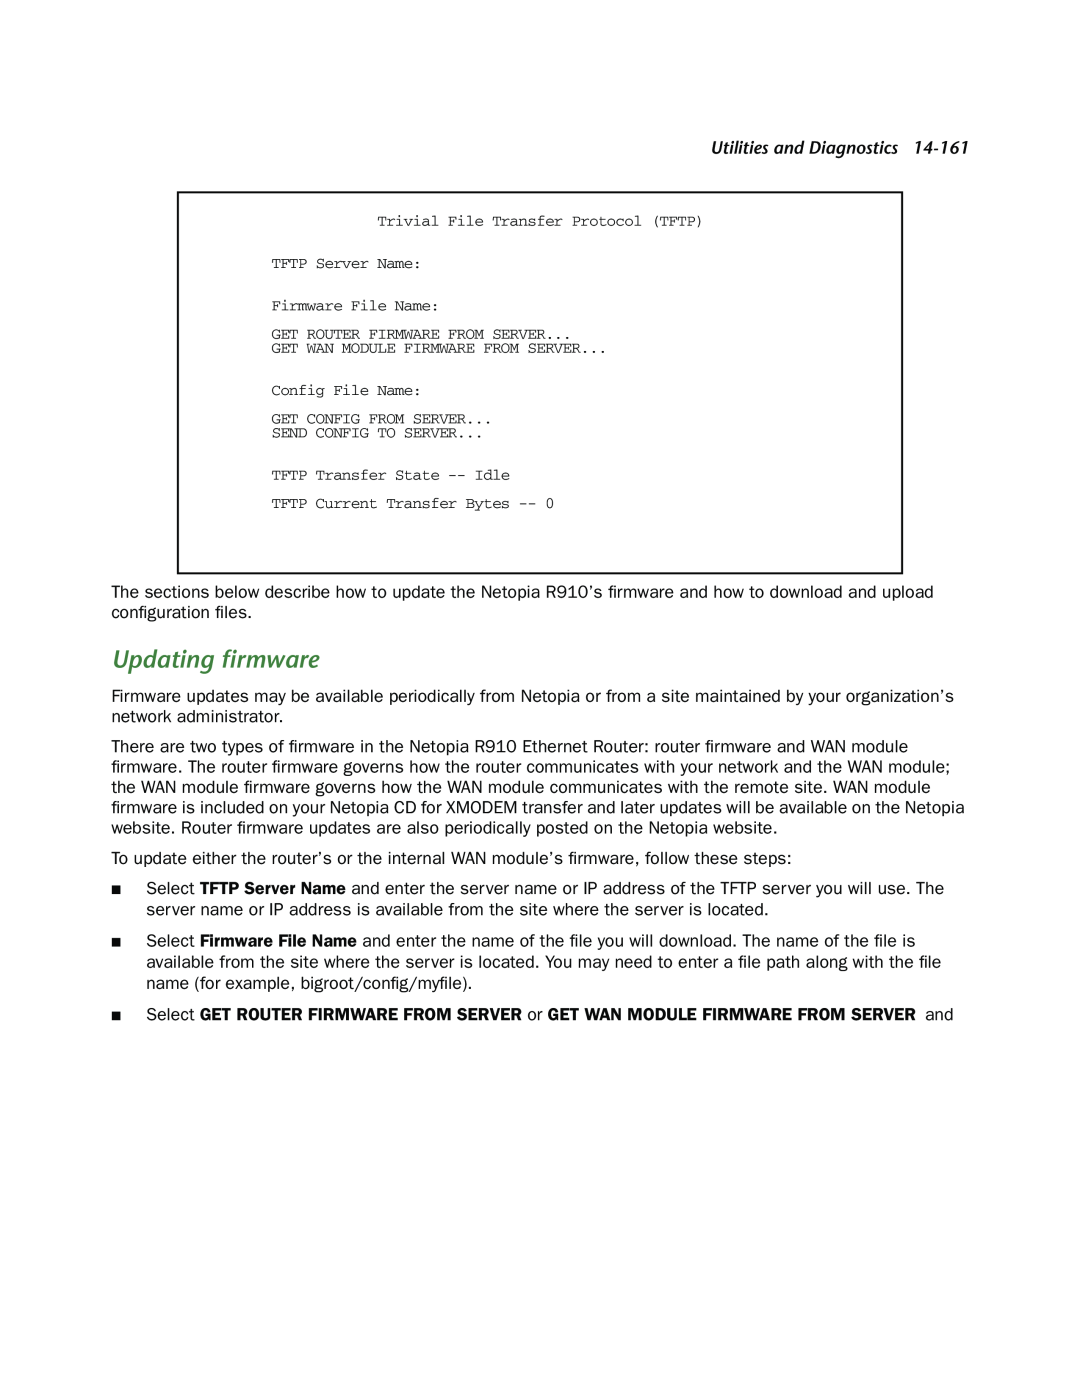 Netopia R910 manual Updating ﬁrmware, Utilities and Diagnostics, Trivial File Transfer Protocol TFTP TFTP Server Name 